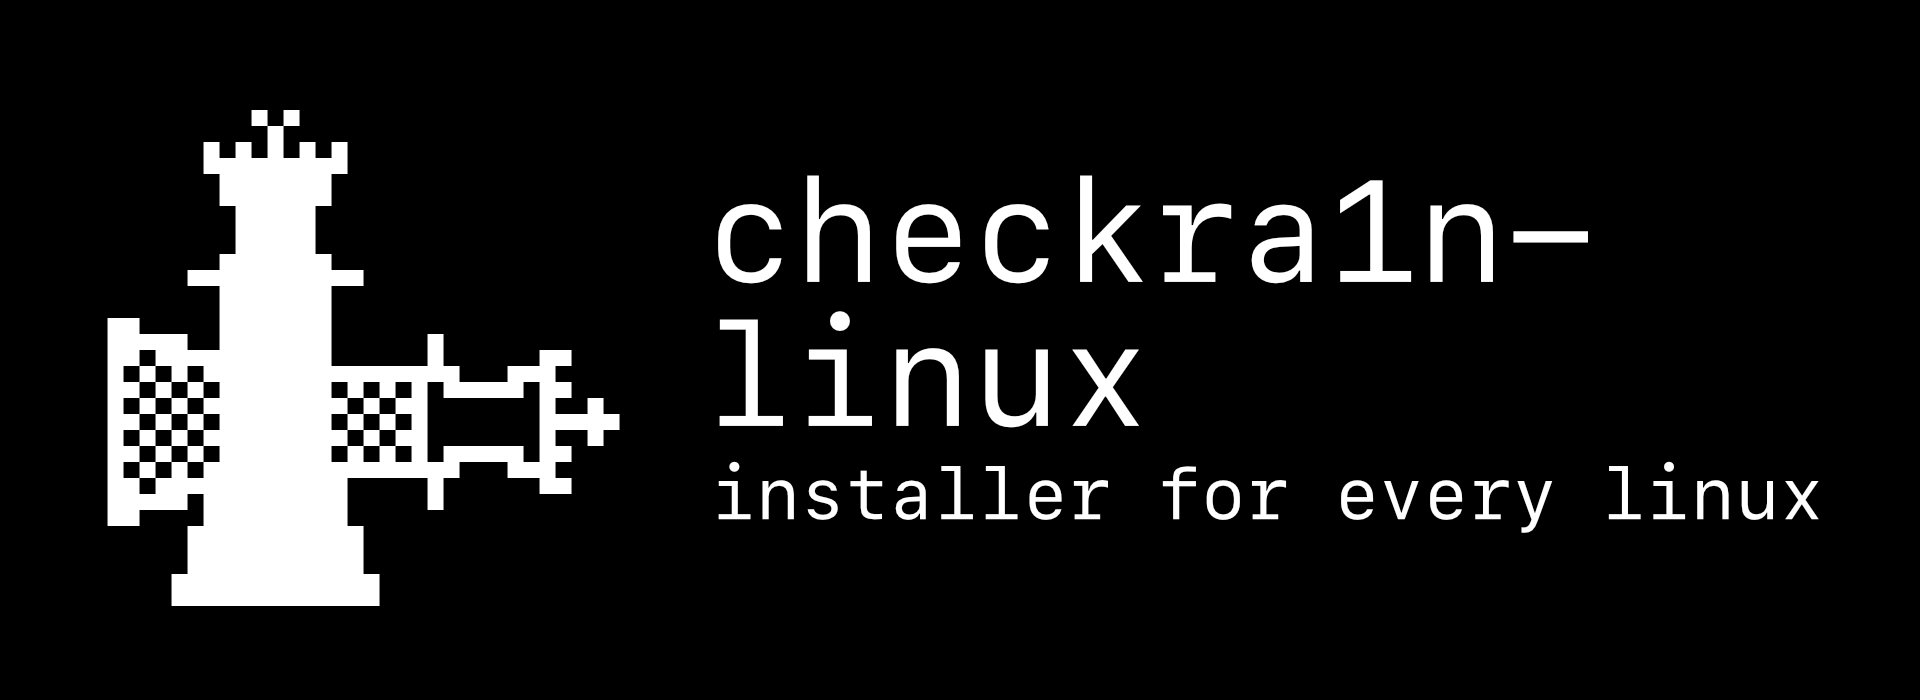 checkra1n-linux